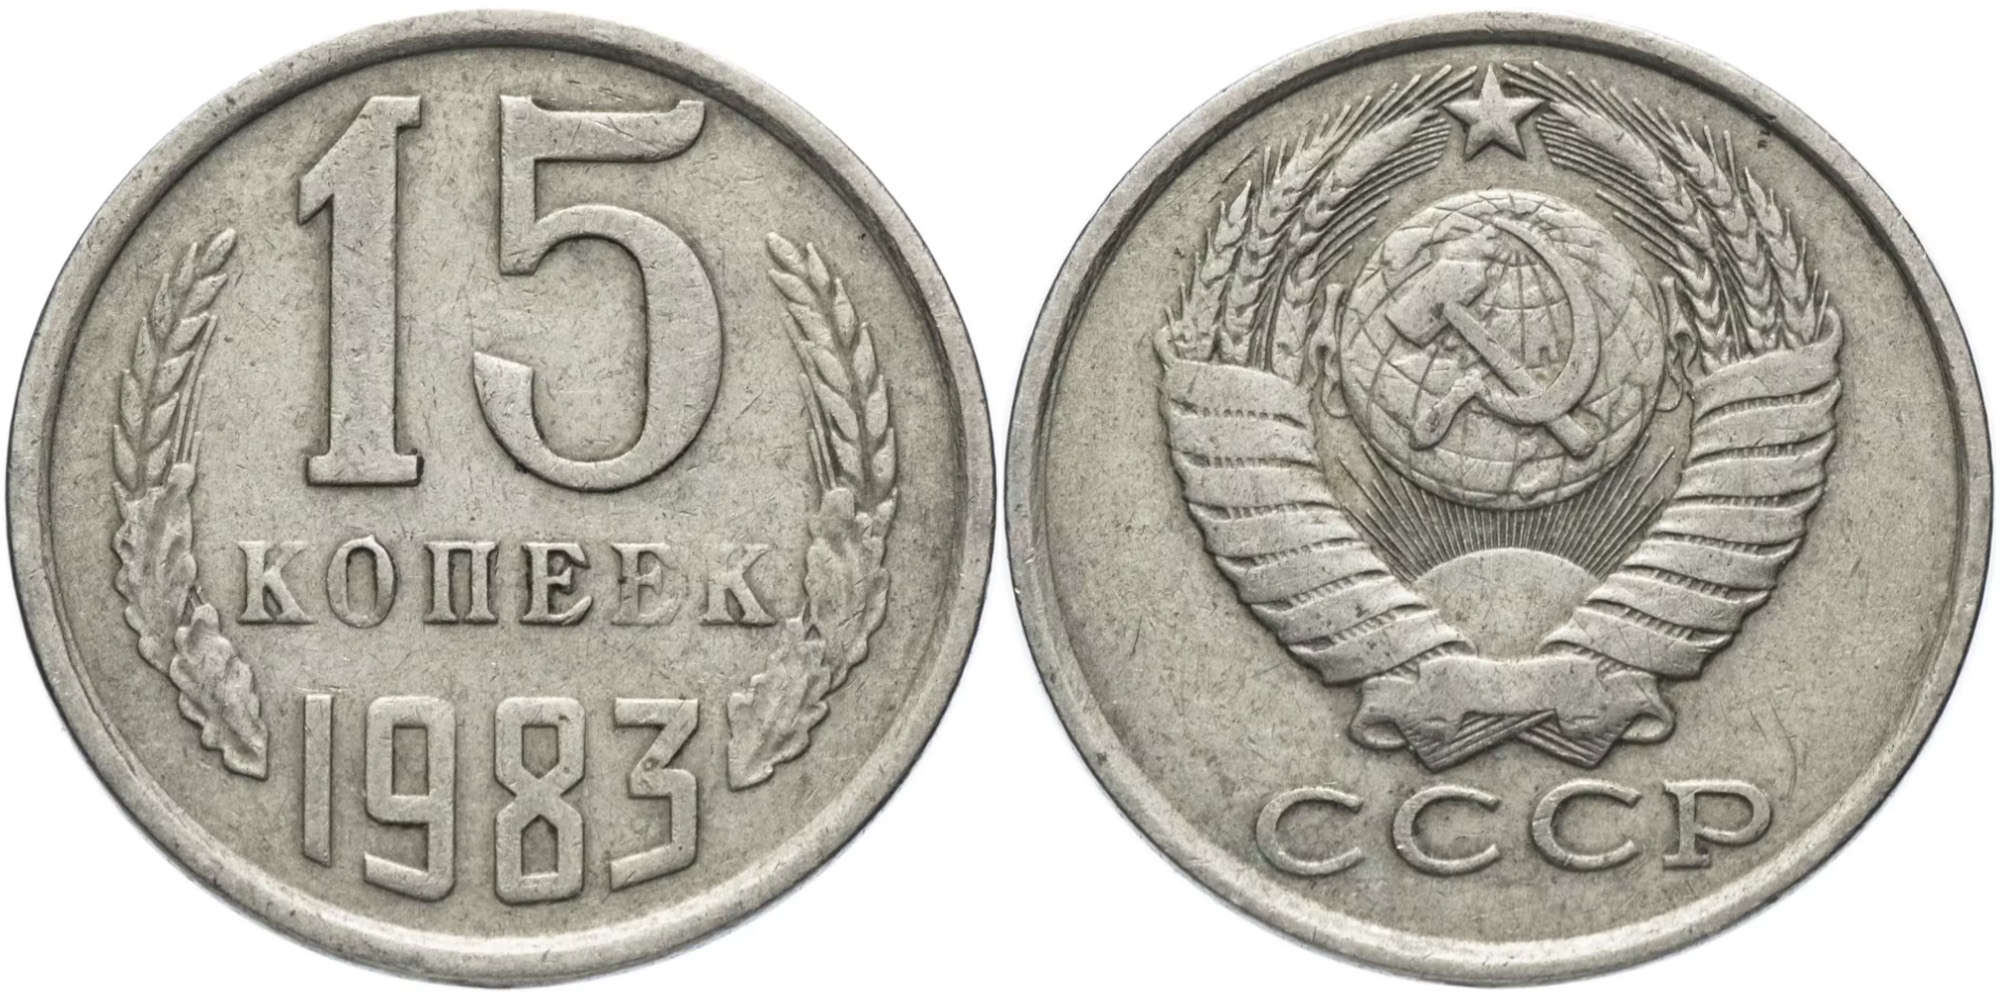 15 копеек 1983 СССР